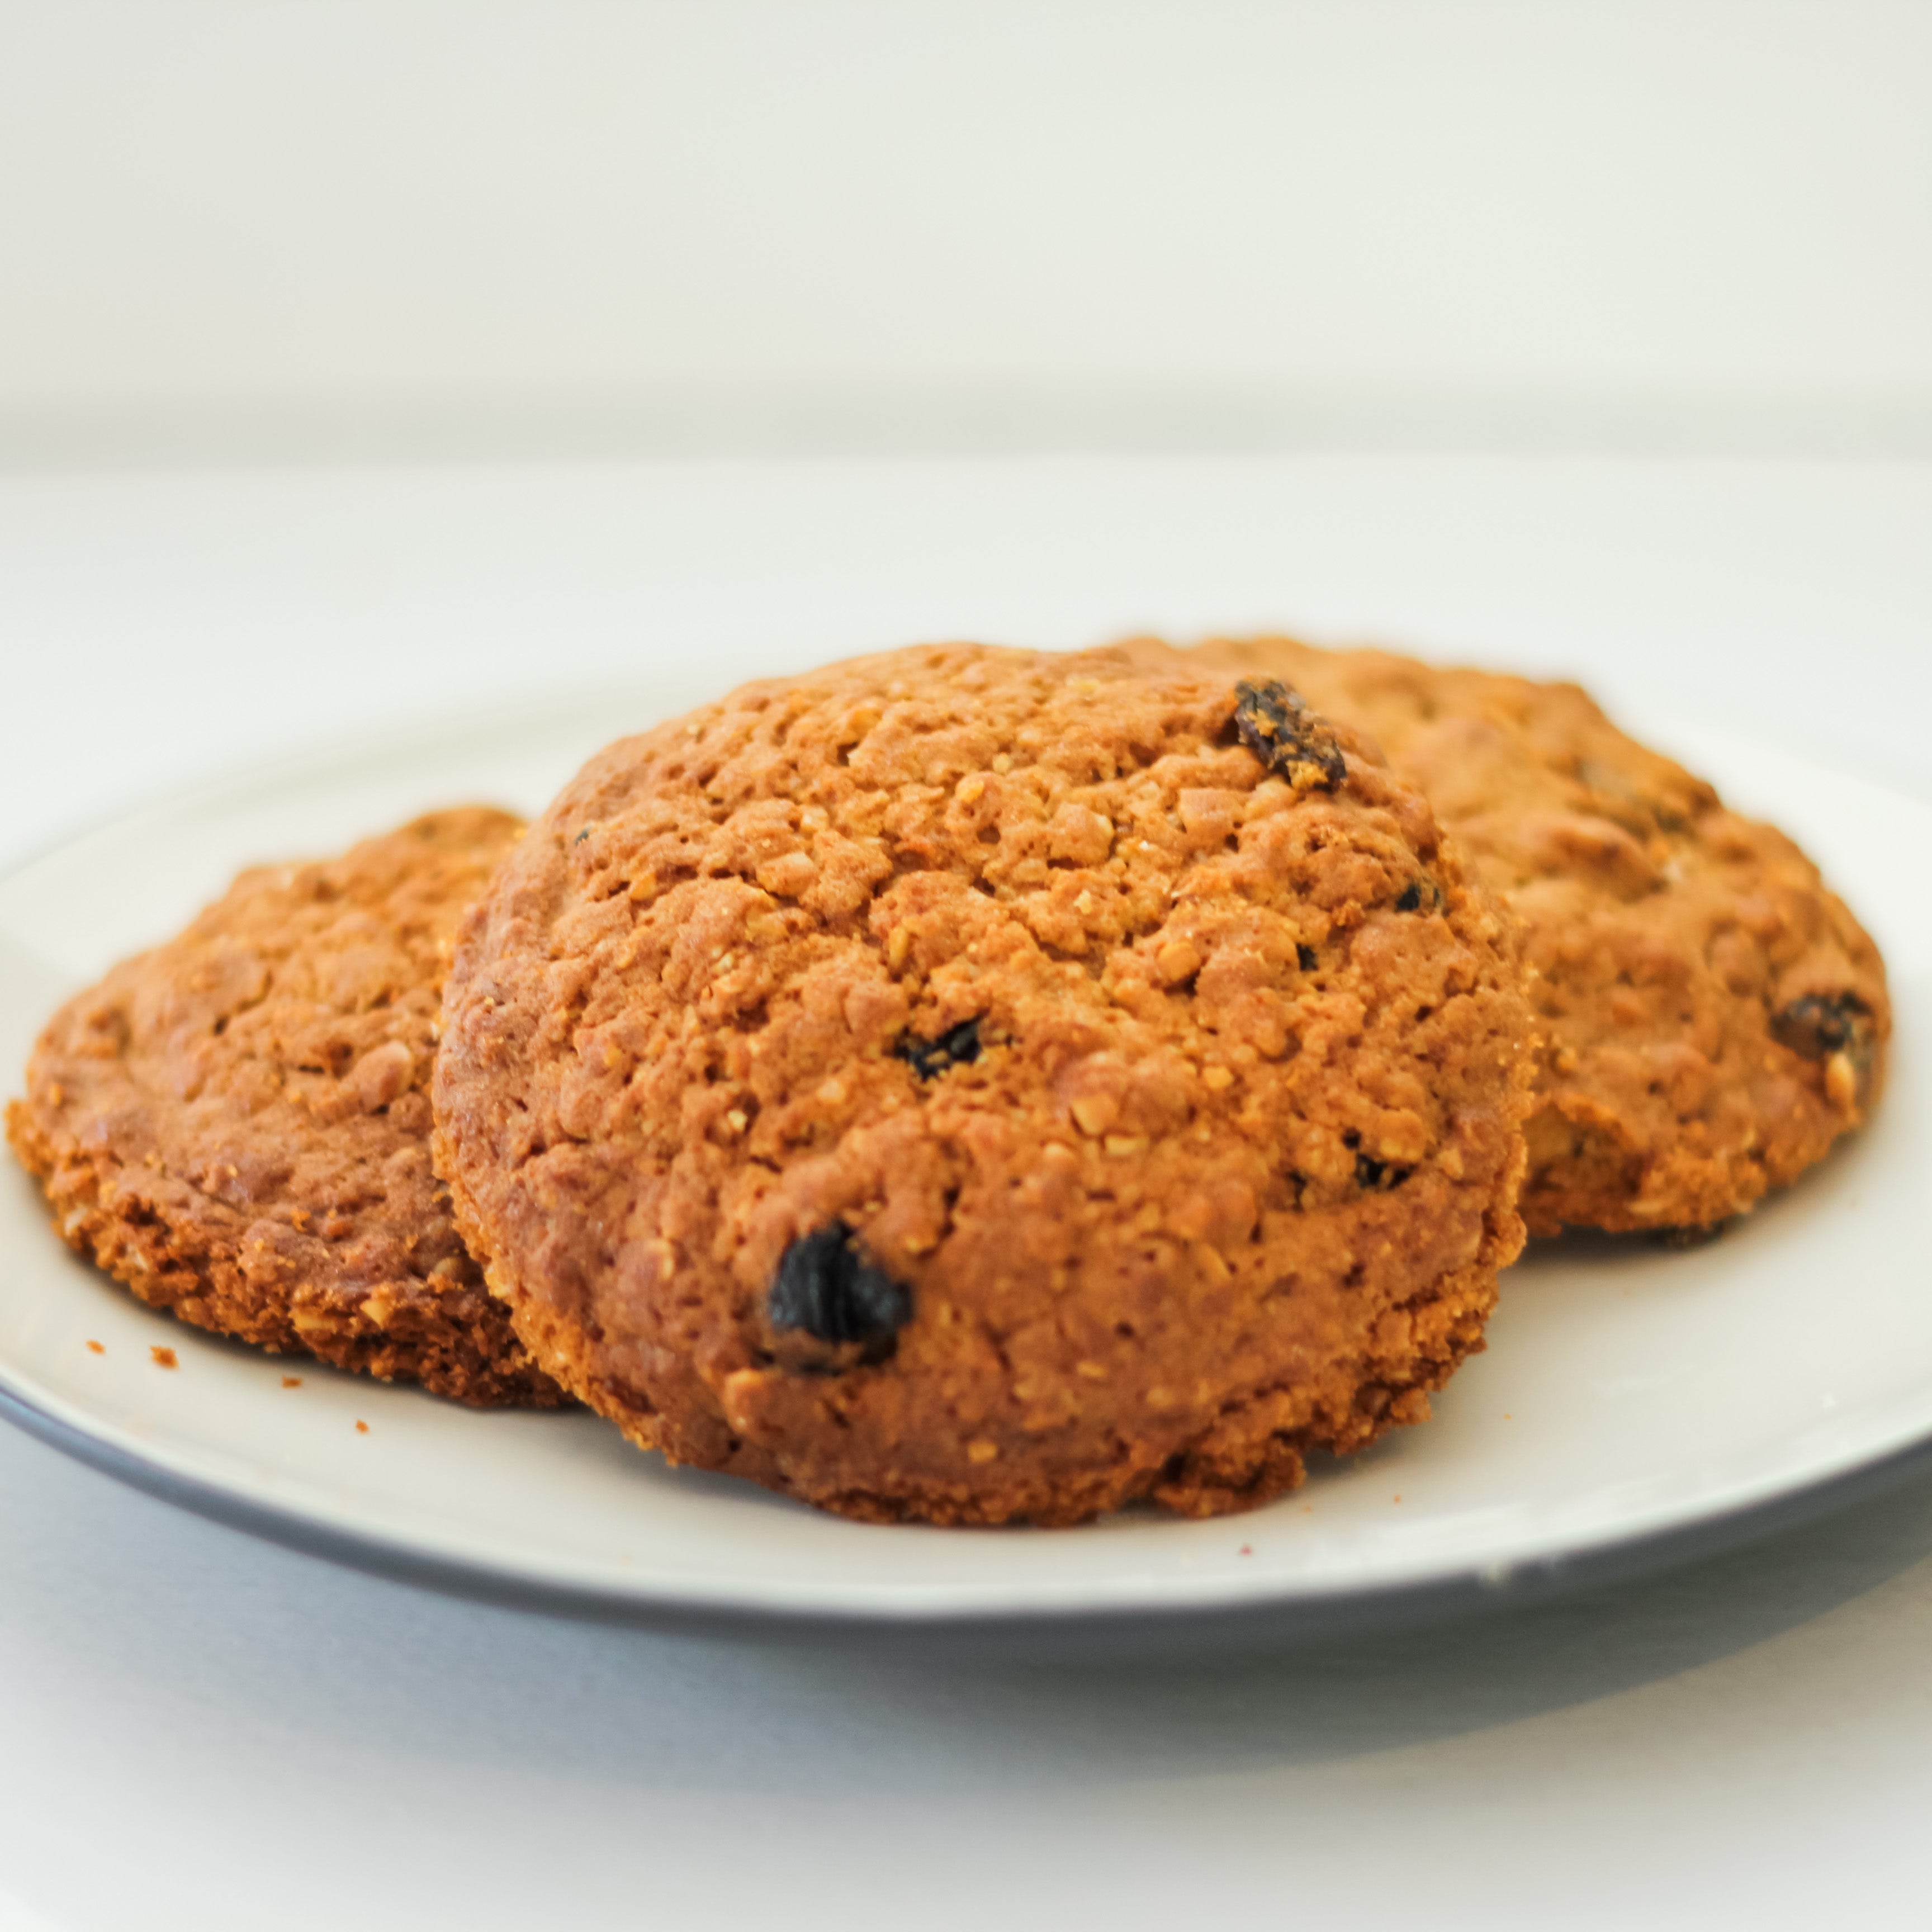 Oatmeal Raisin cookies / each